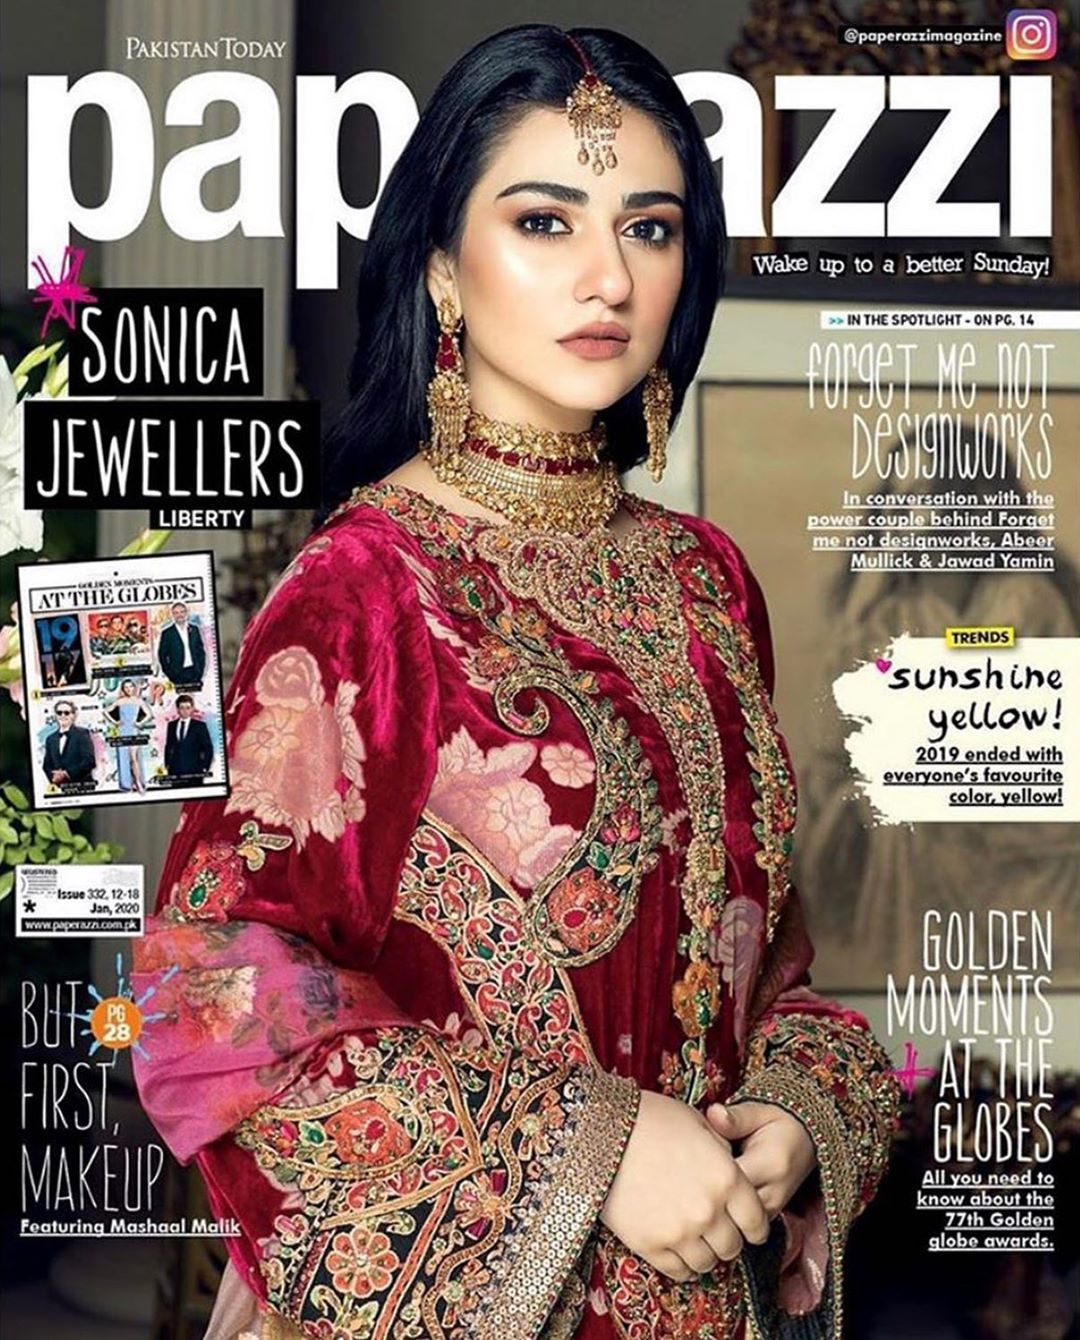 Sarah Khan on the cover of Paprazzi magazine